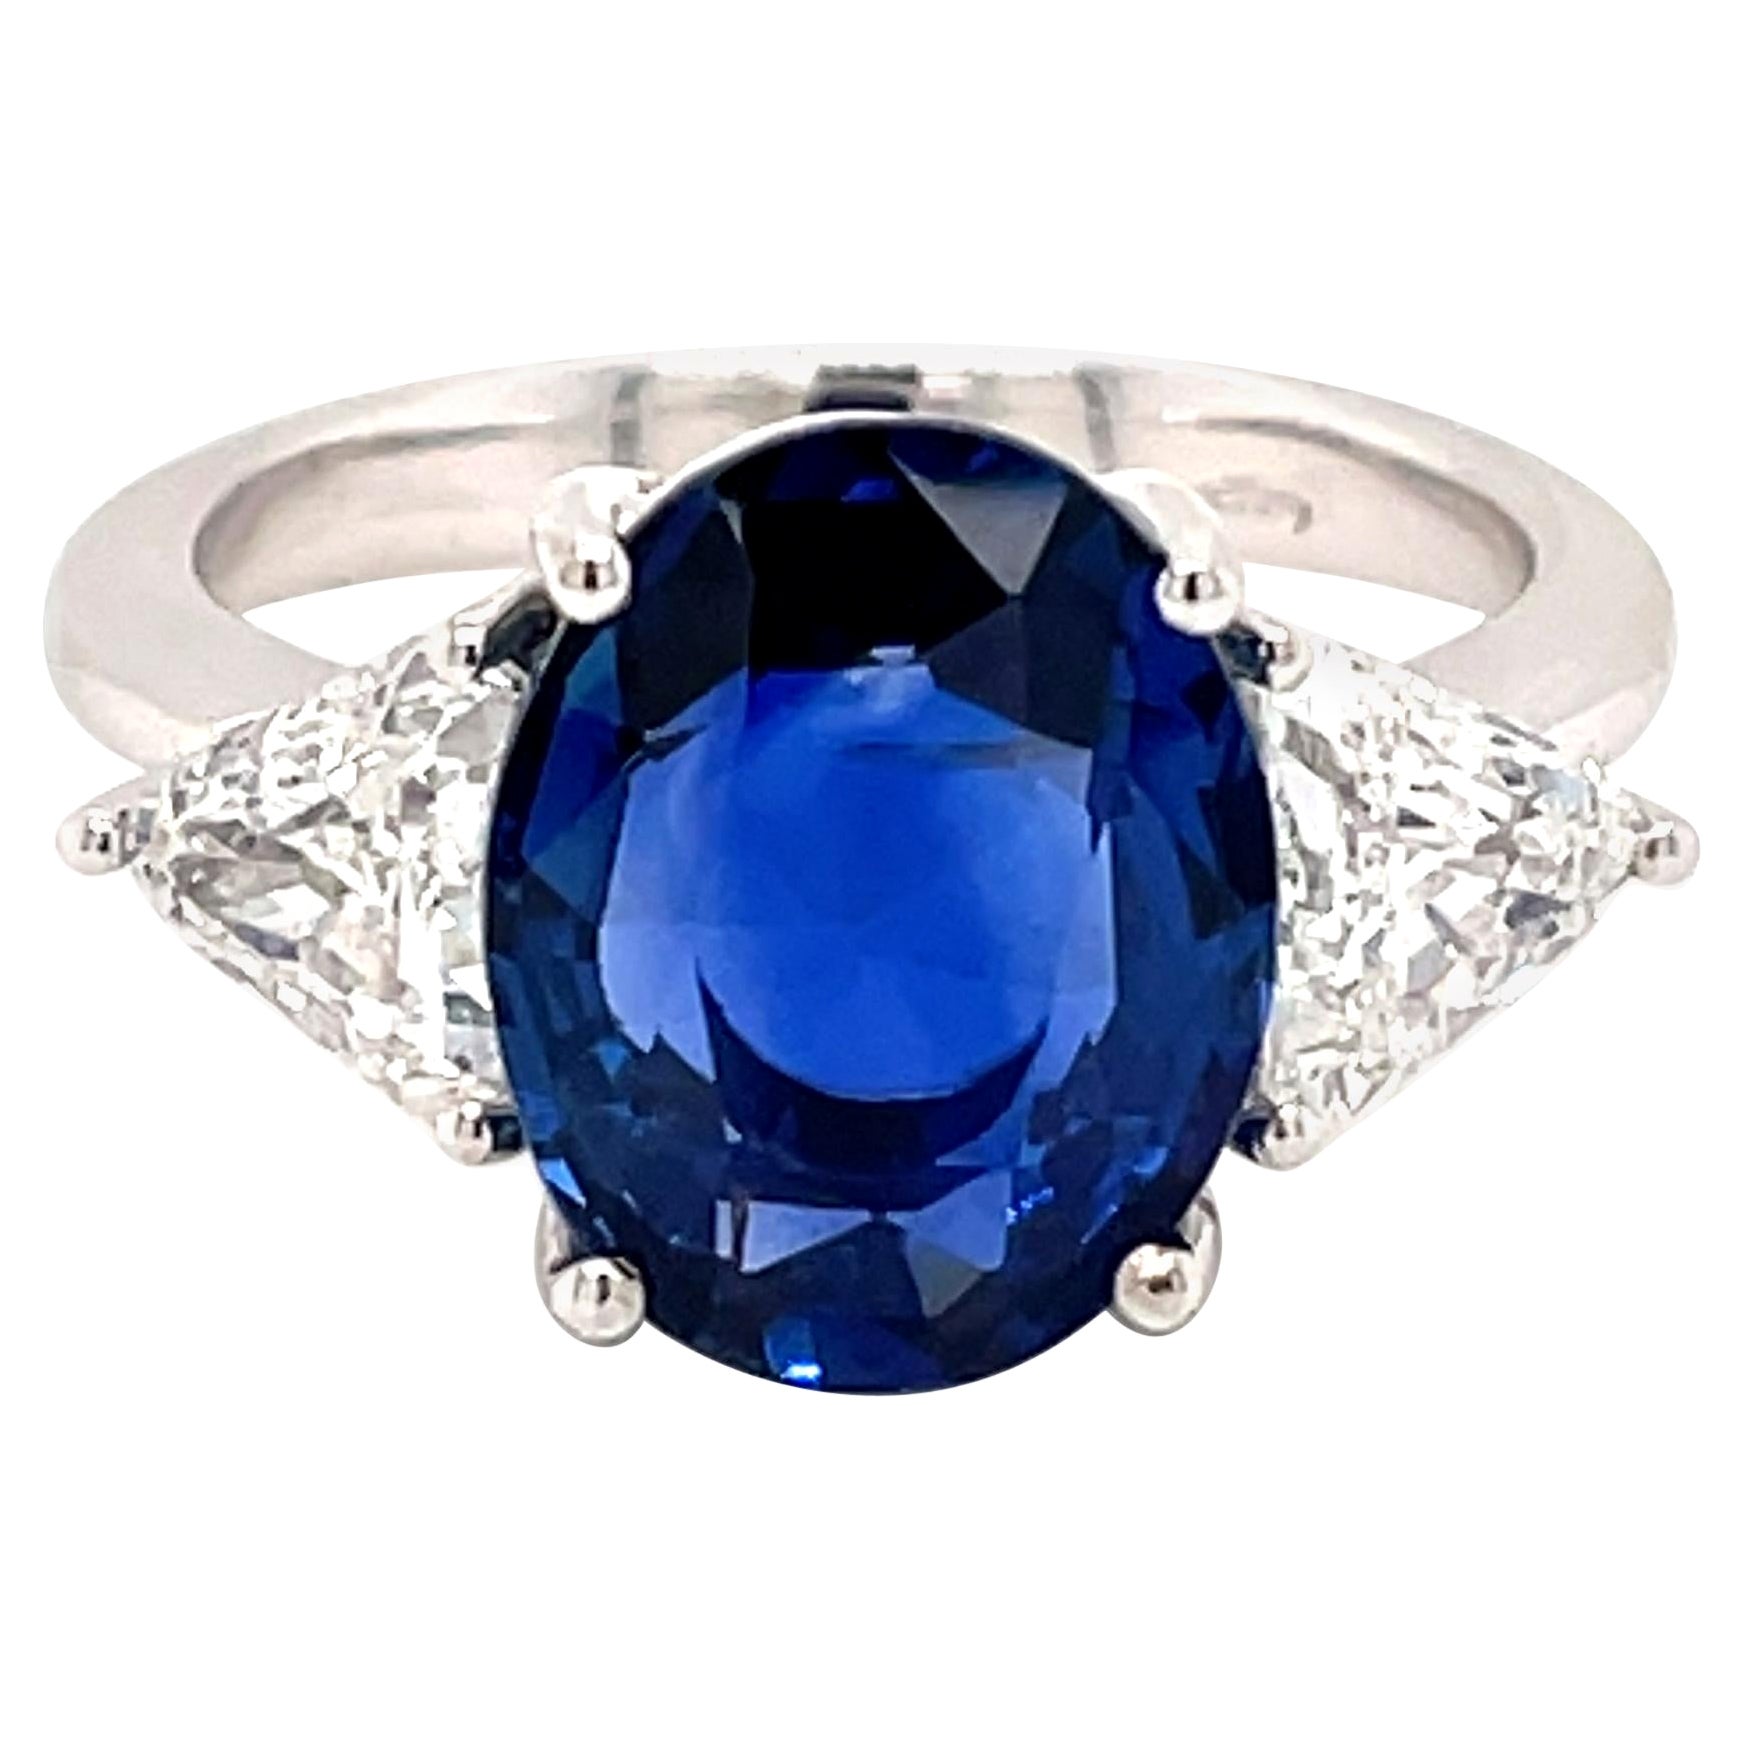 Vintage Certified 6 Carat Unheated Burma Sapphire Diamond Engagement Ring